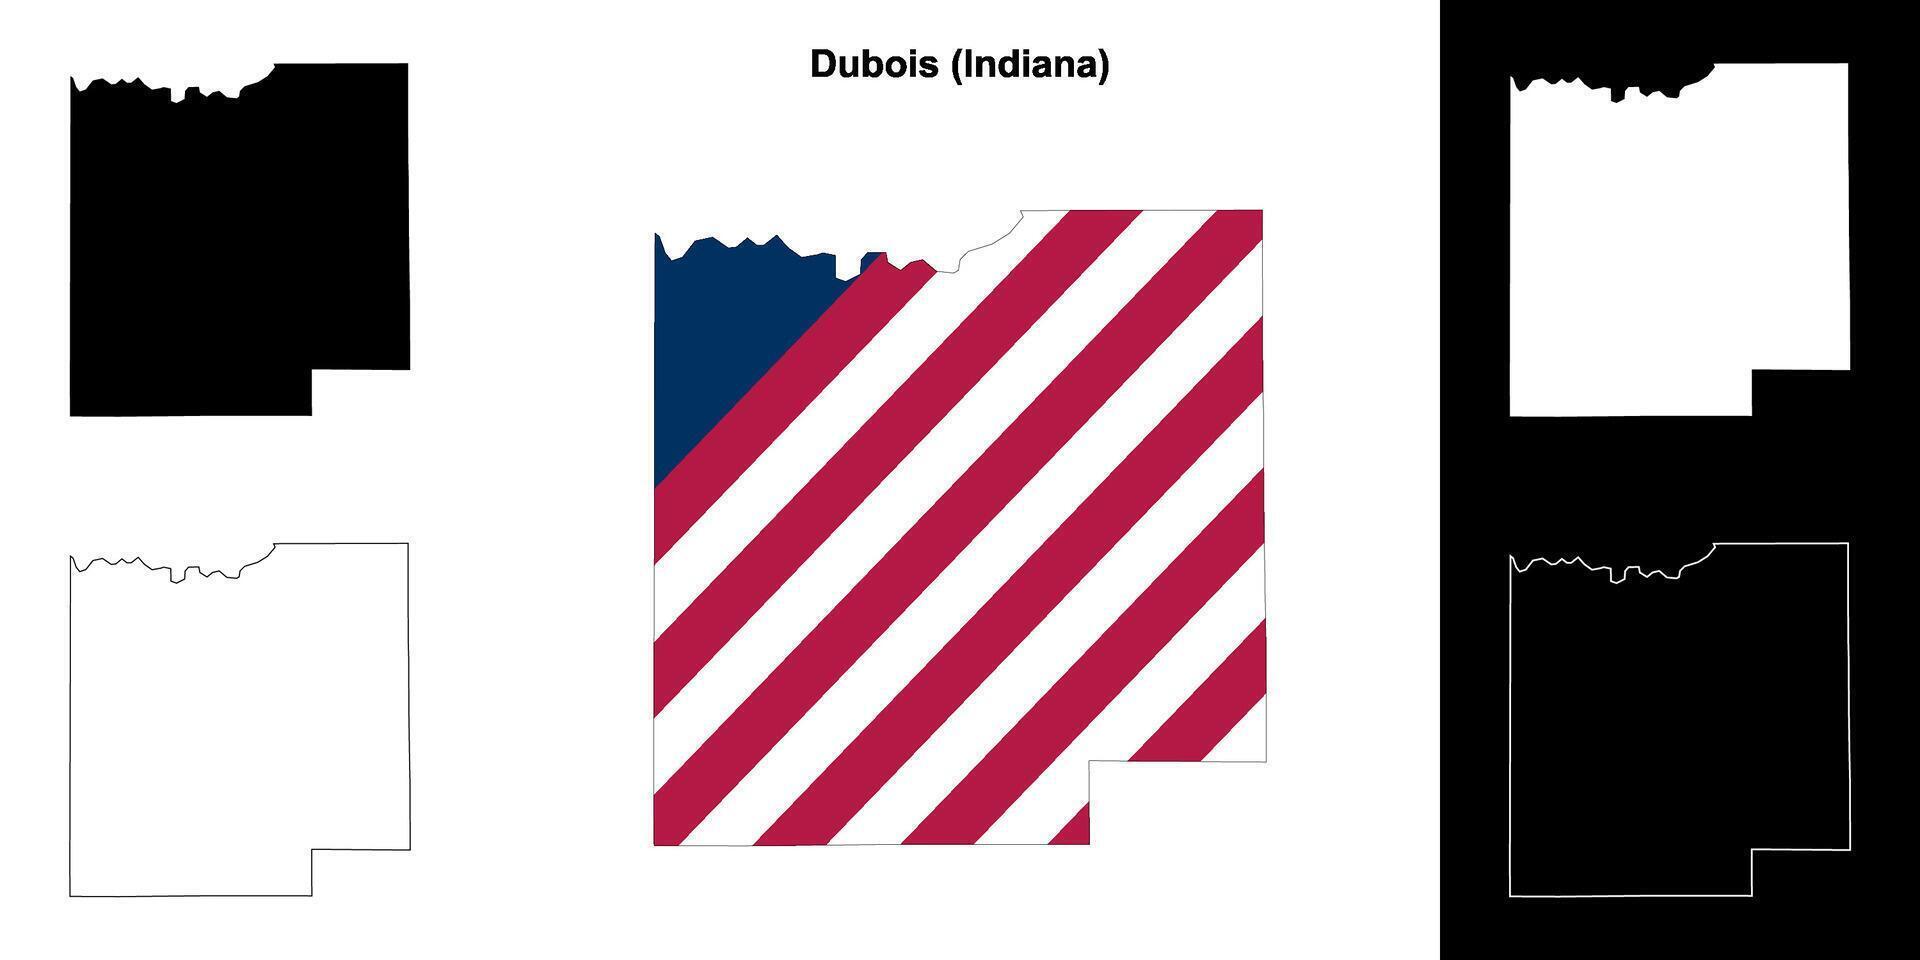 dubois contea, Indiana schema carta geografica impostato vettore